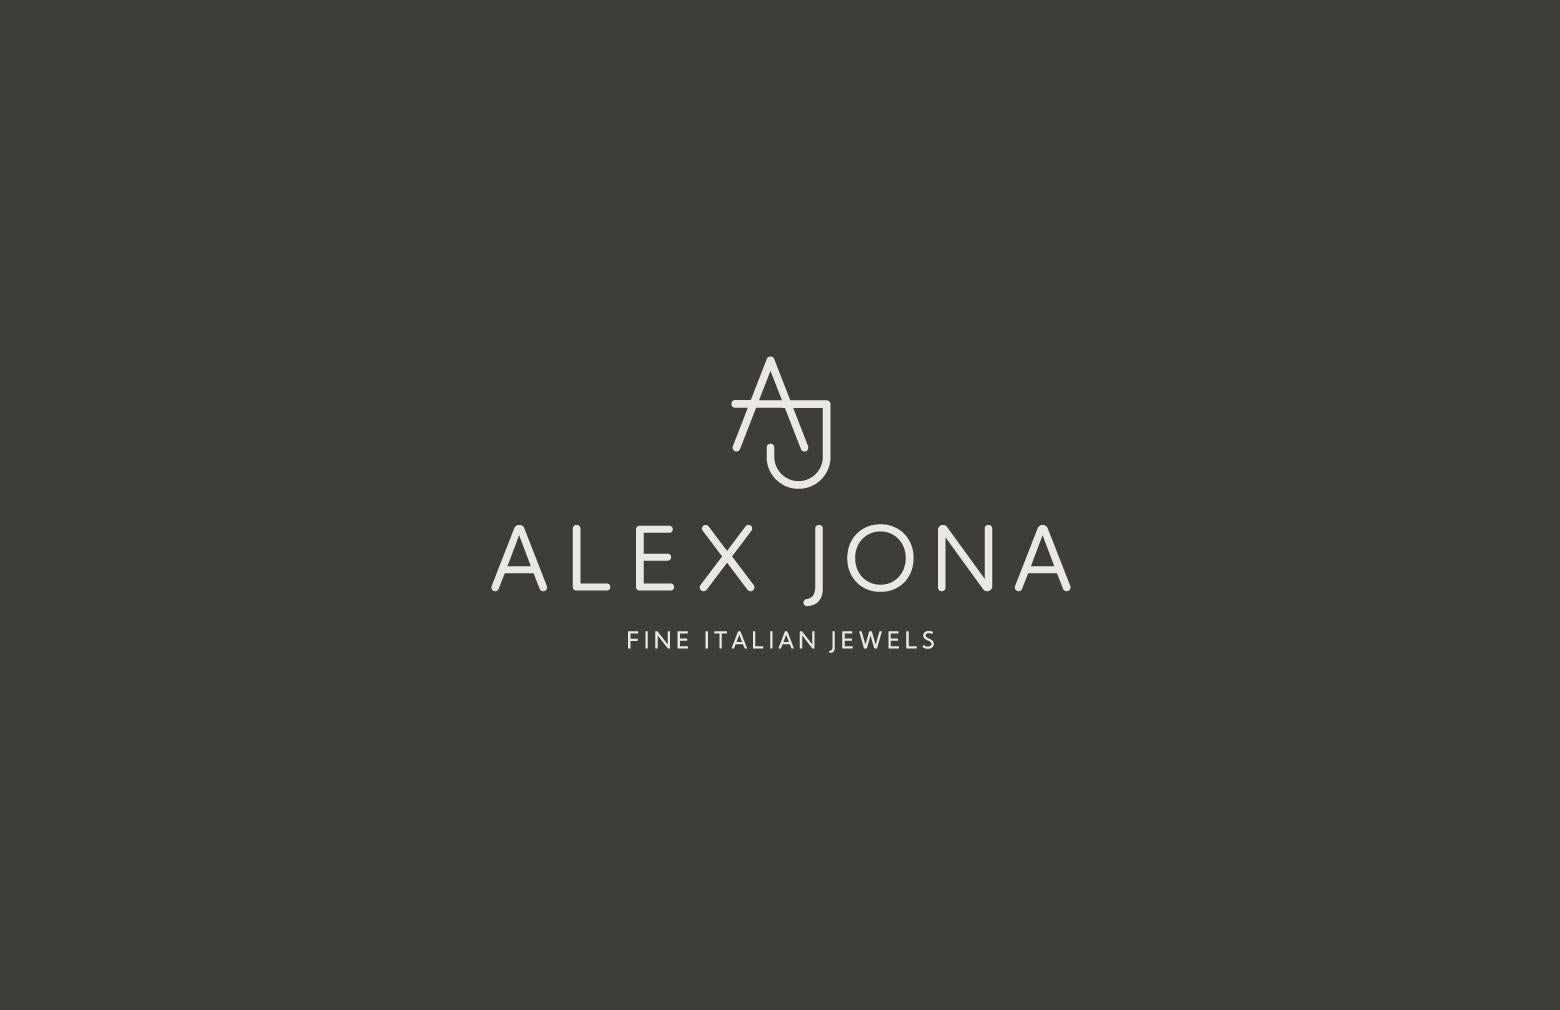 Alex Jona Onyx White Diamond 18 Karat White Gold Pendant Earrings For Sale 6